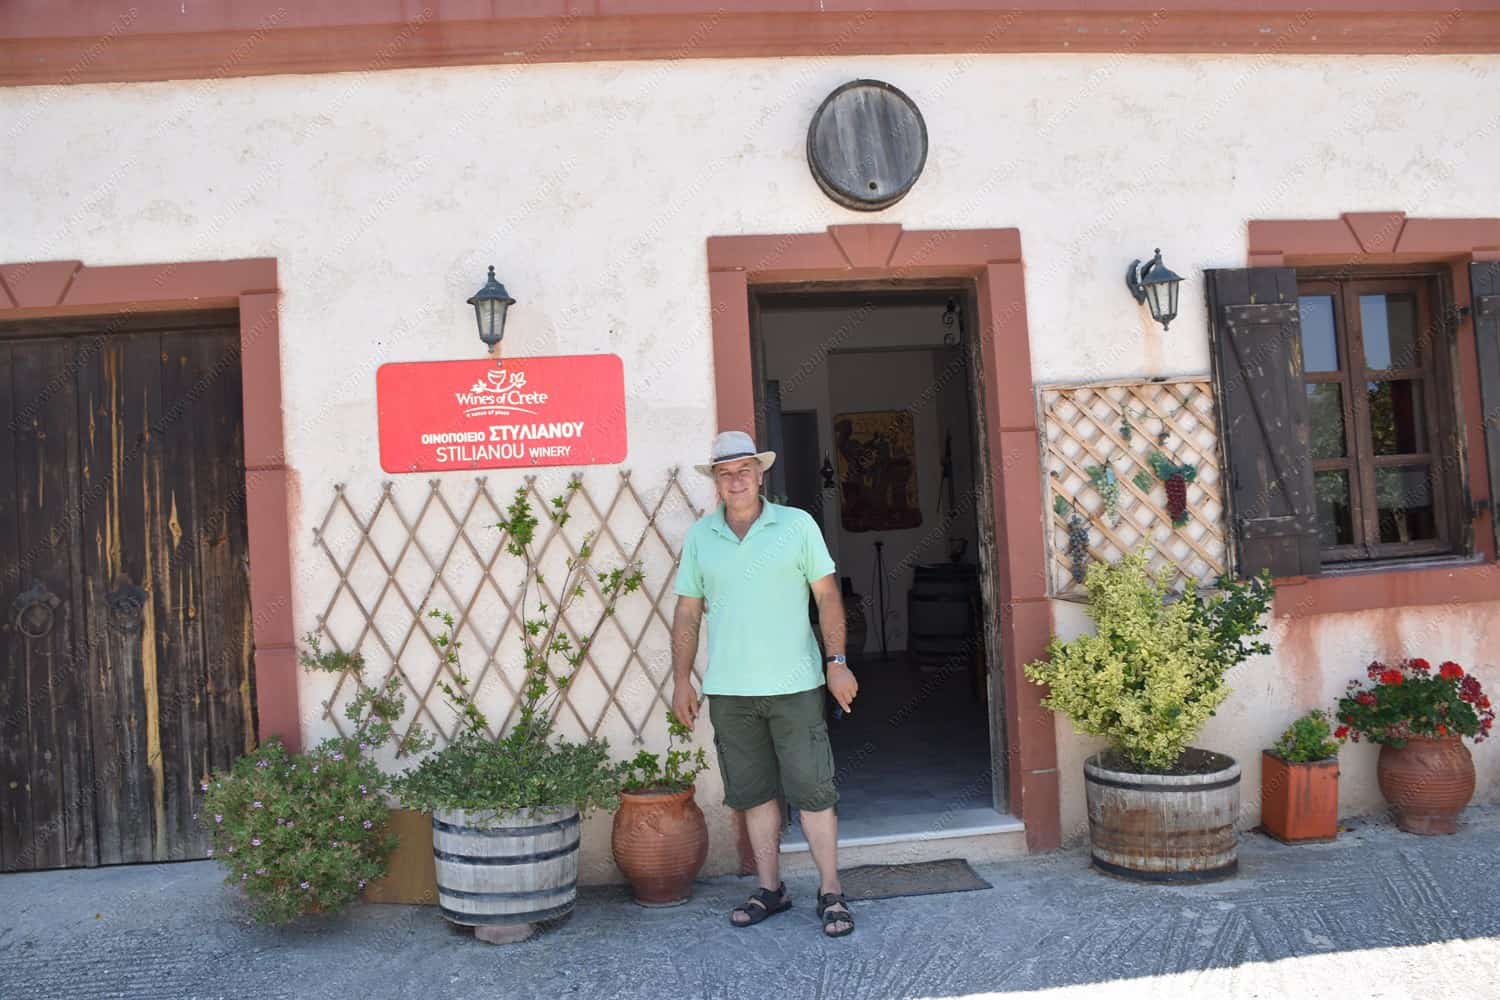 You are currently viewing Organic Winery Stilianou (Kounavi), Crete